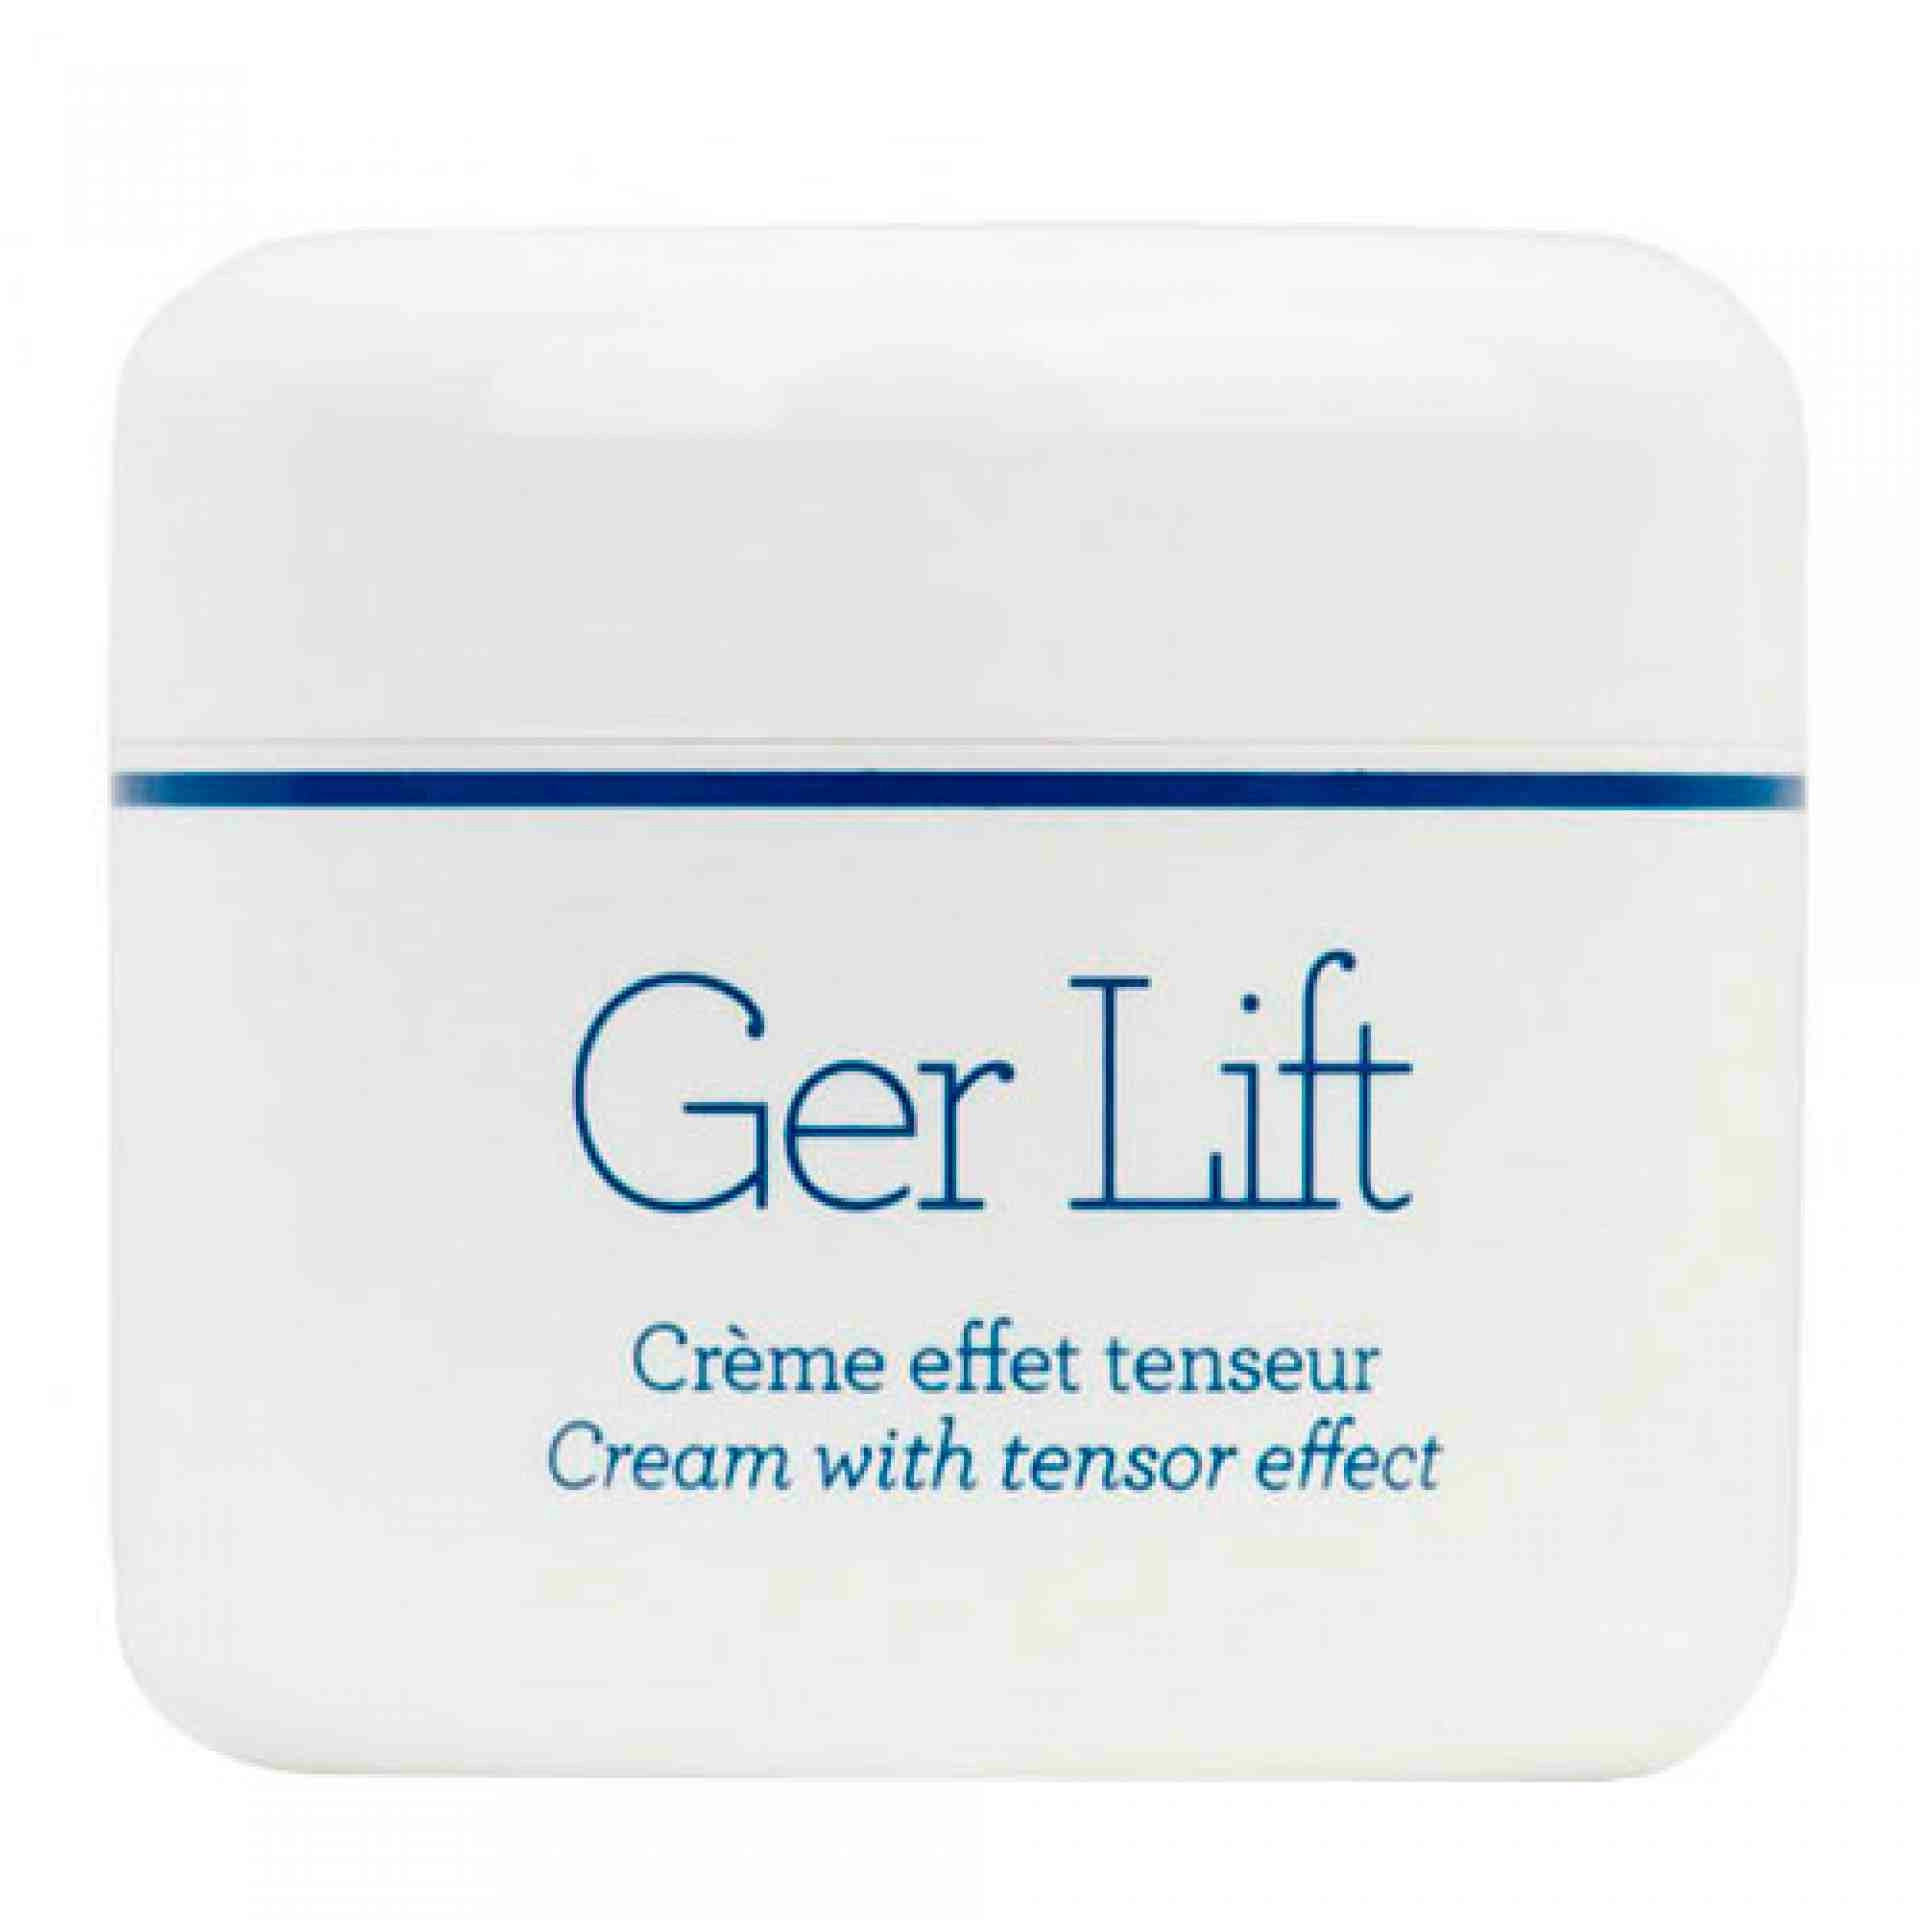 Ger Lift | Crema reafirmante 30ml - Marinos & Spa - Gernétic ®